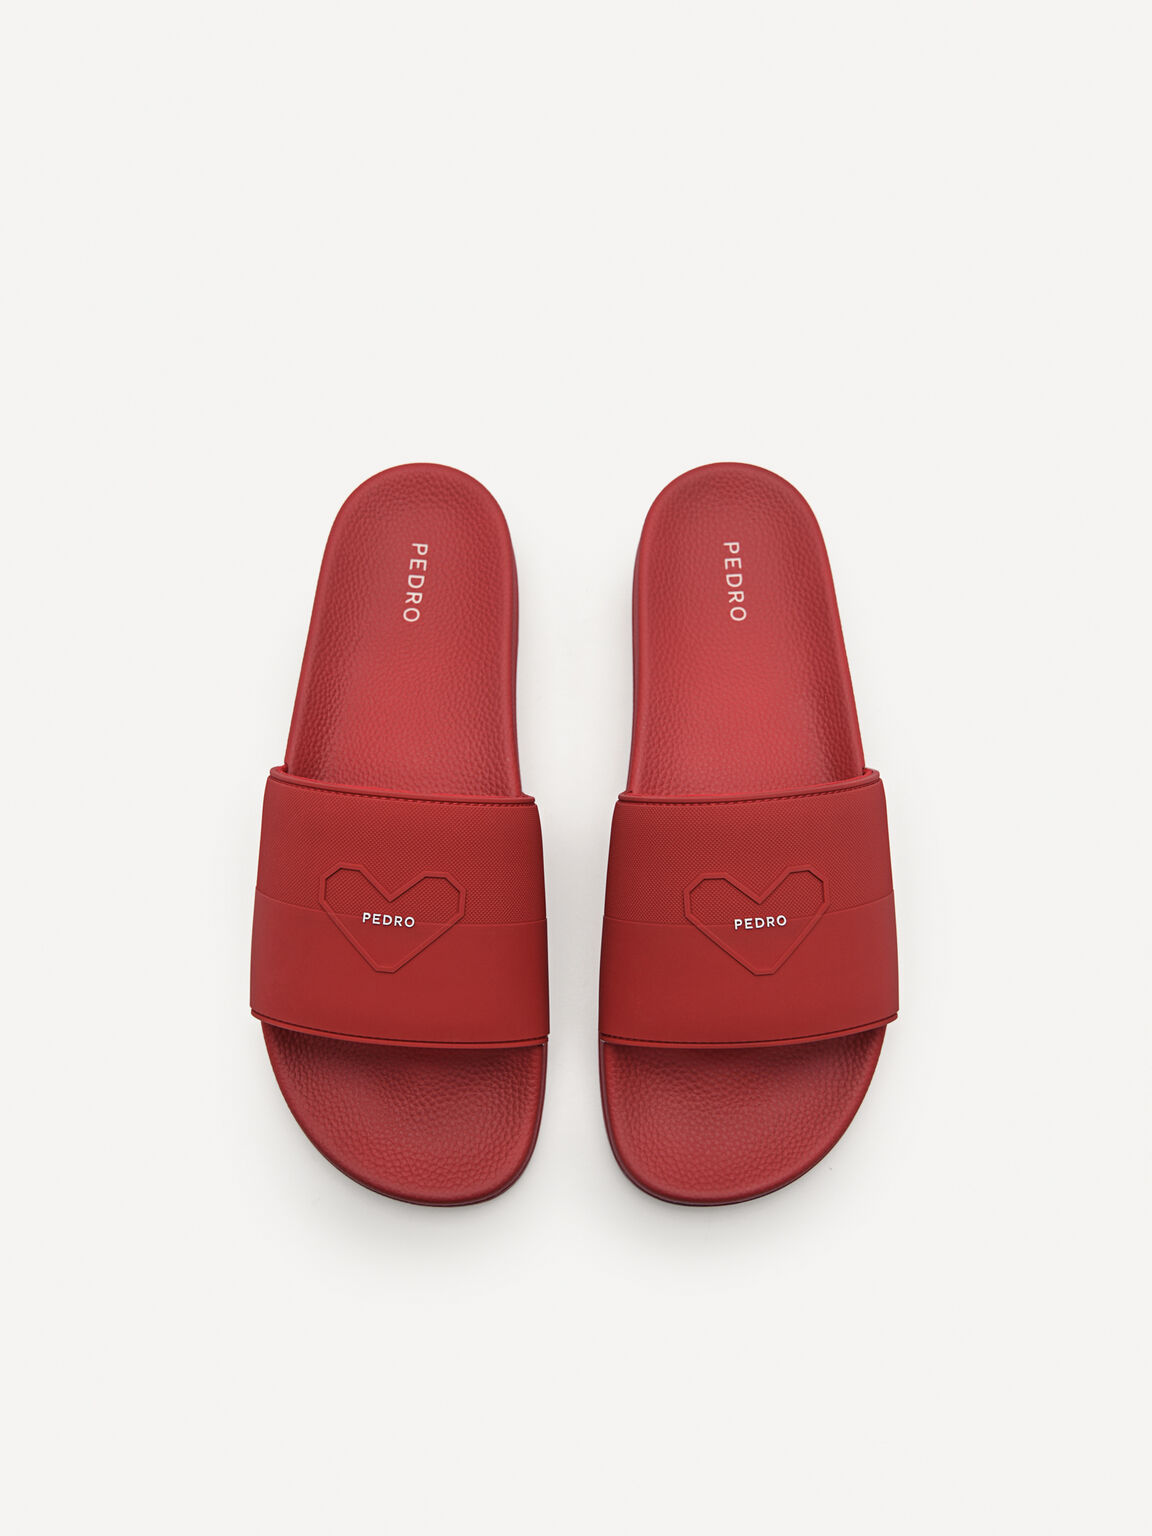 Eterna Slide Sandals, Red